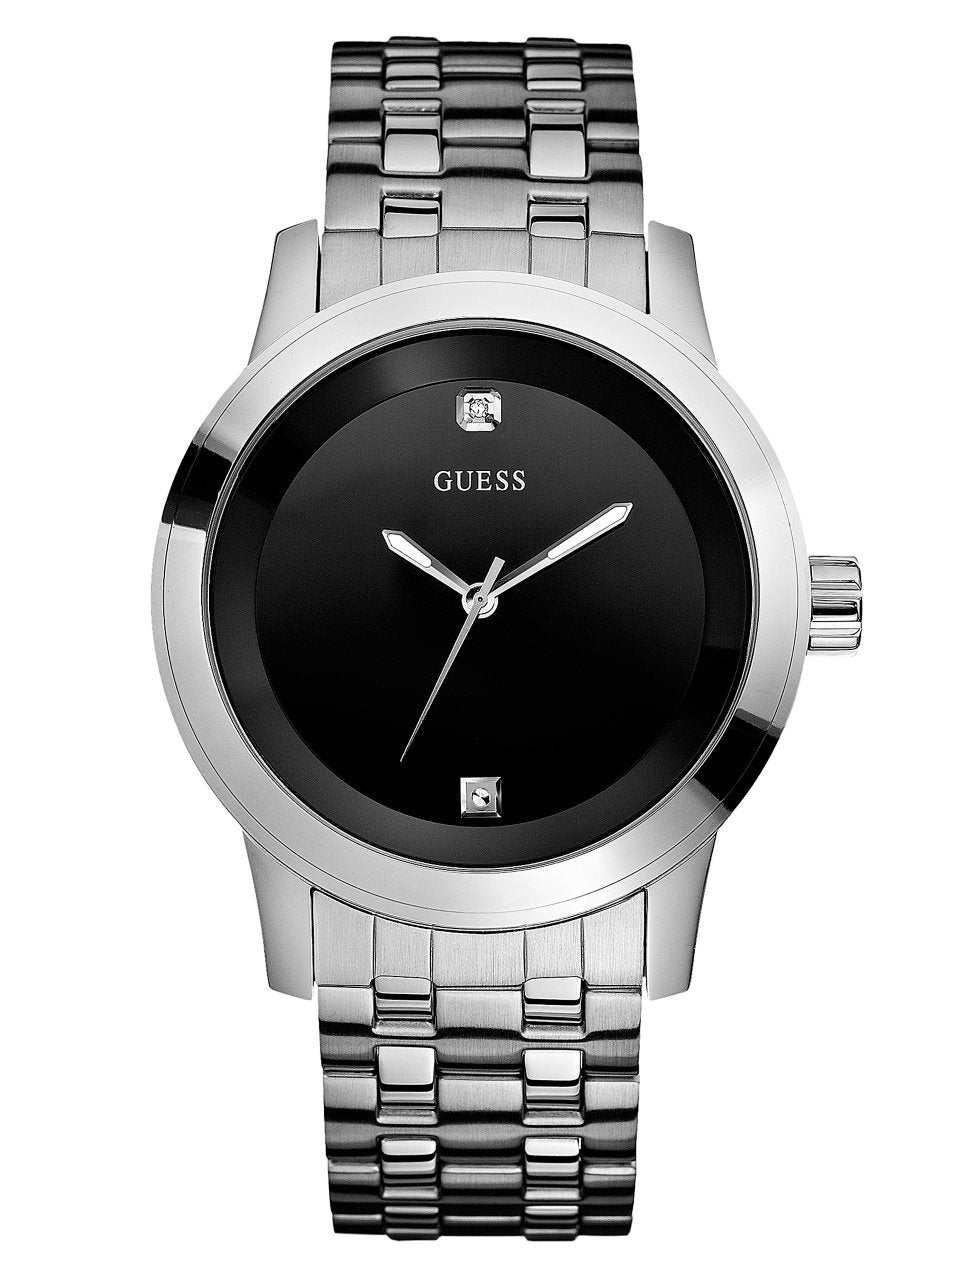 Dress - WATCHES - Diamond INC US SPORT Black U11576G1 and Silver-Tone Watch GUESS